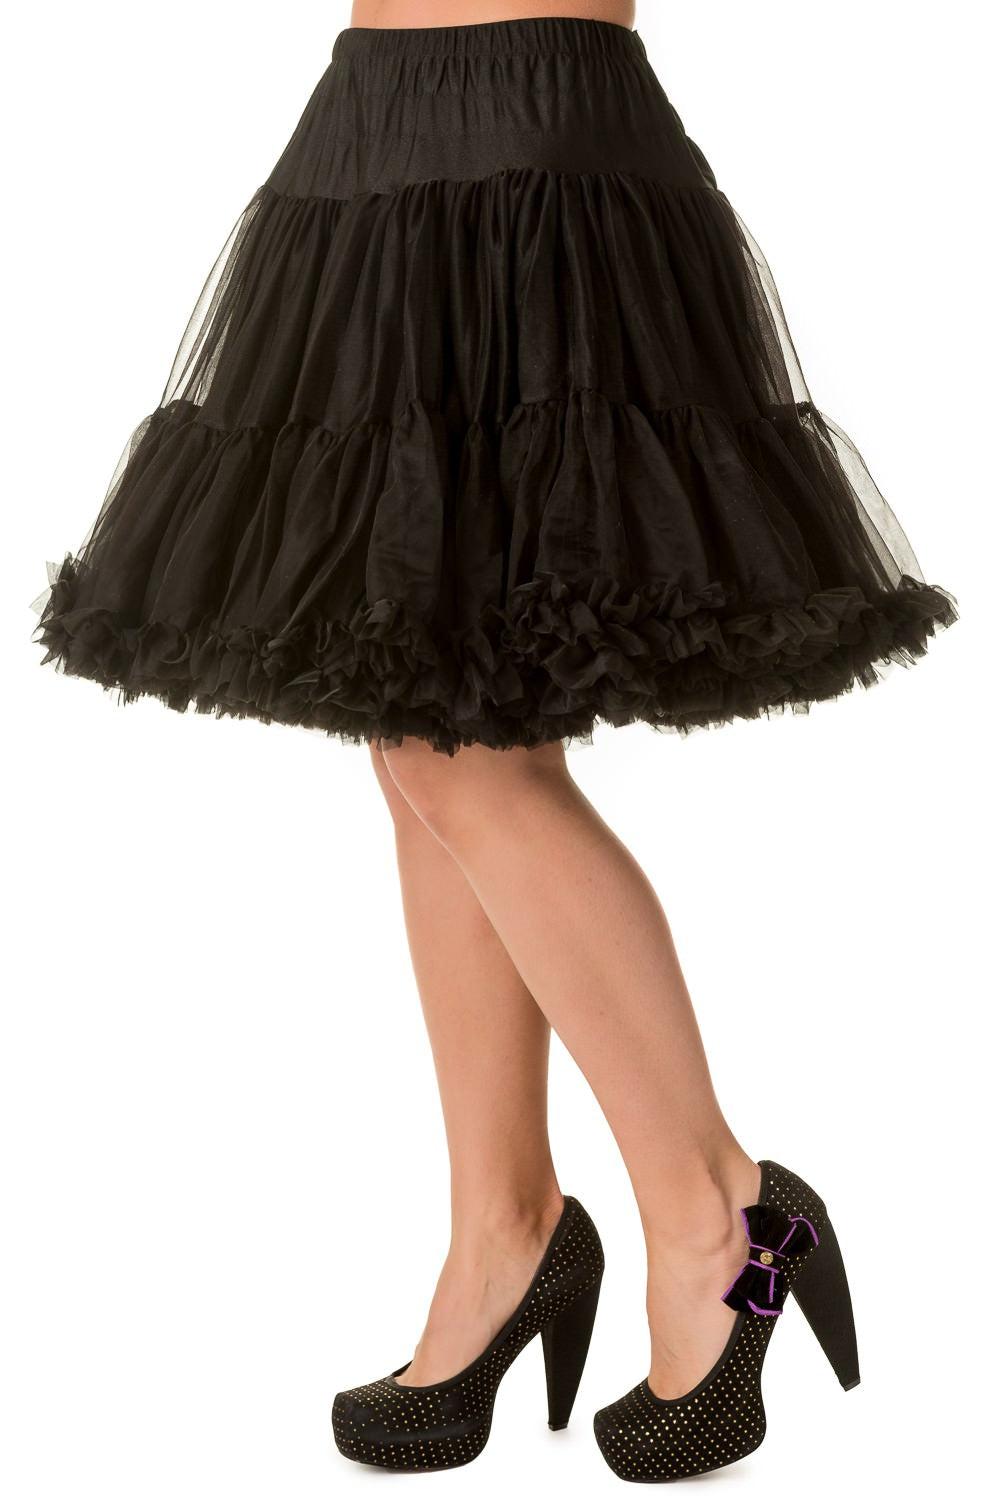 Walkabout Petticoat in Black - Natasha Marie Clothing